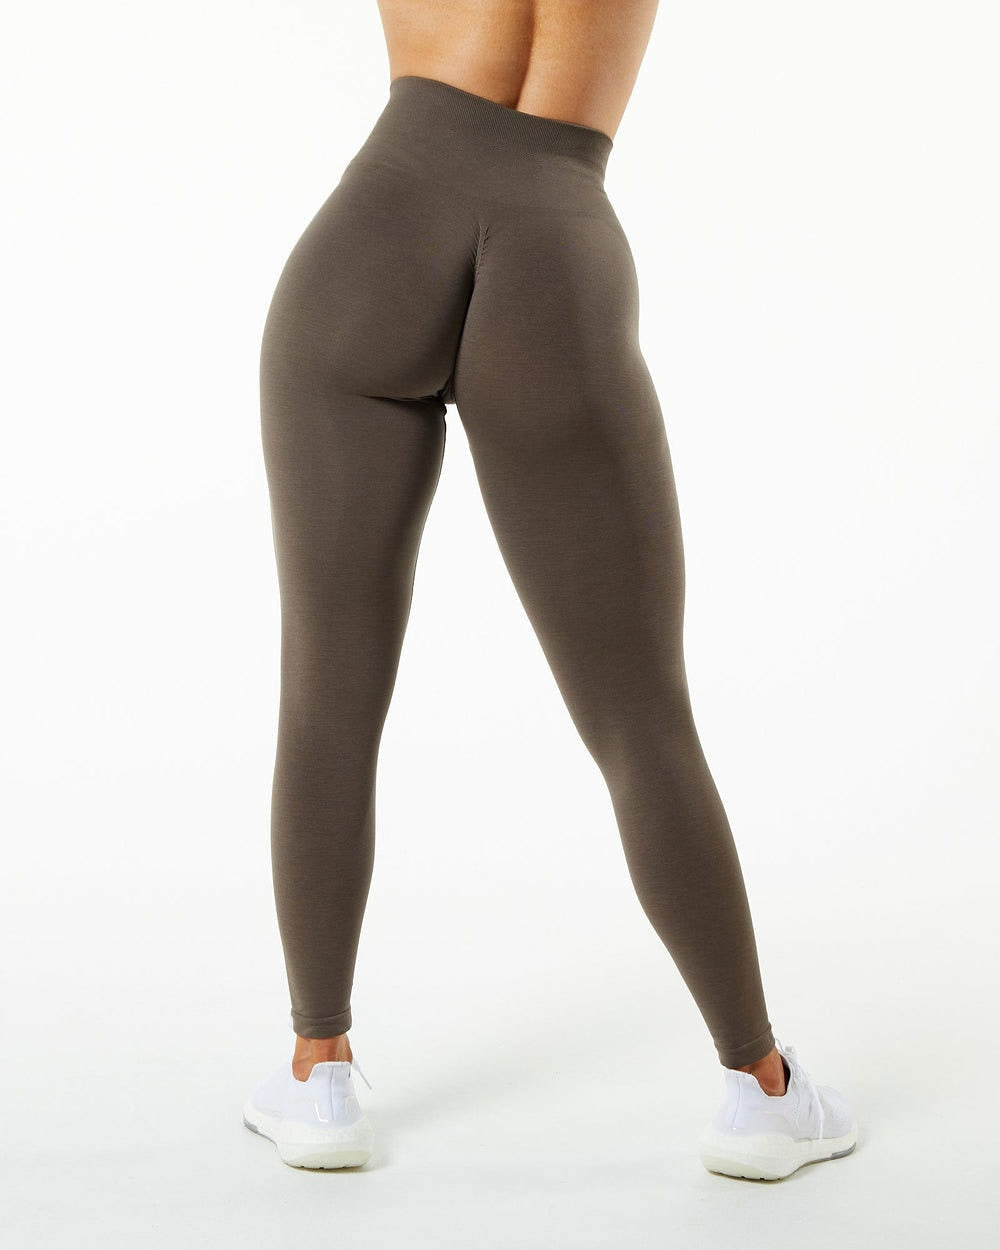 Athlete Yoga Pants